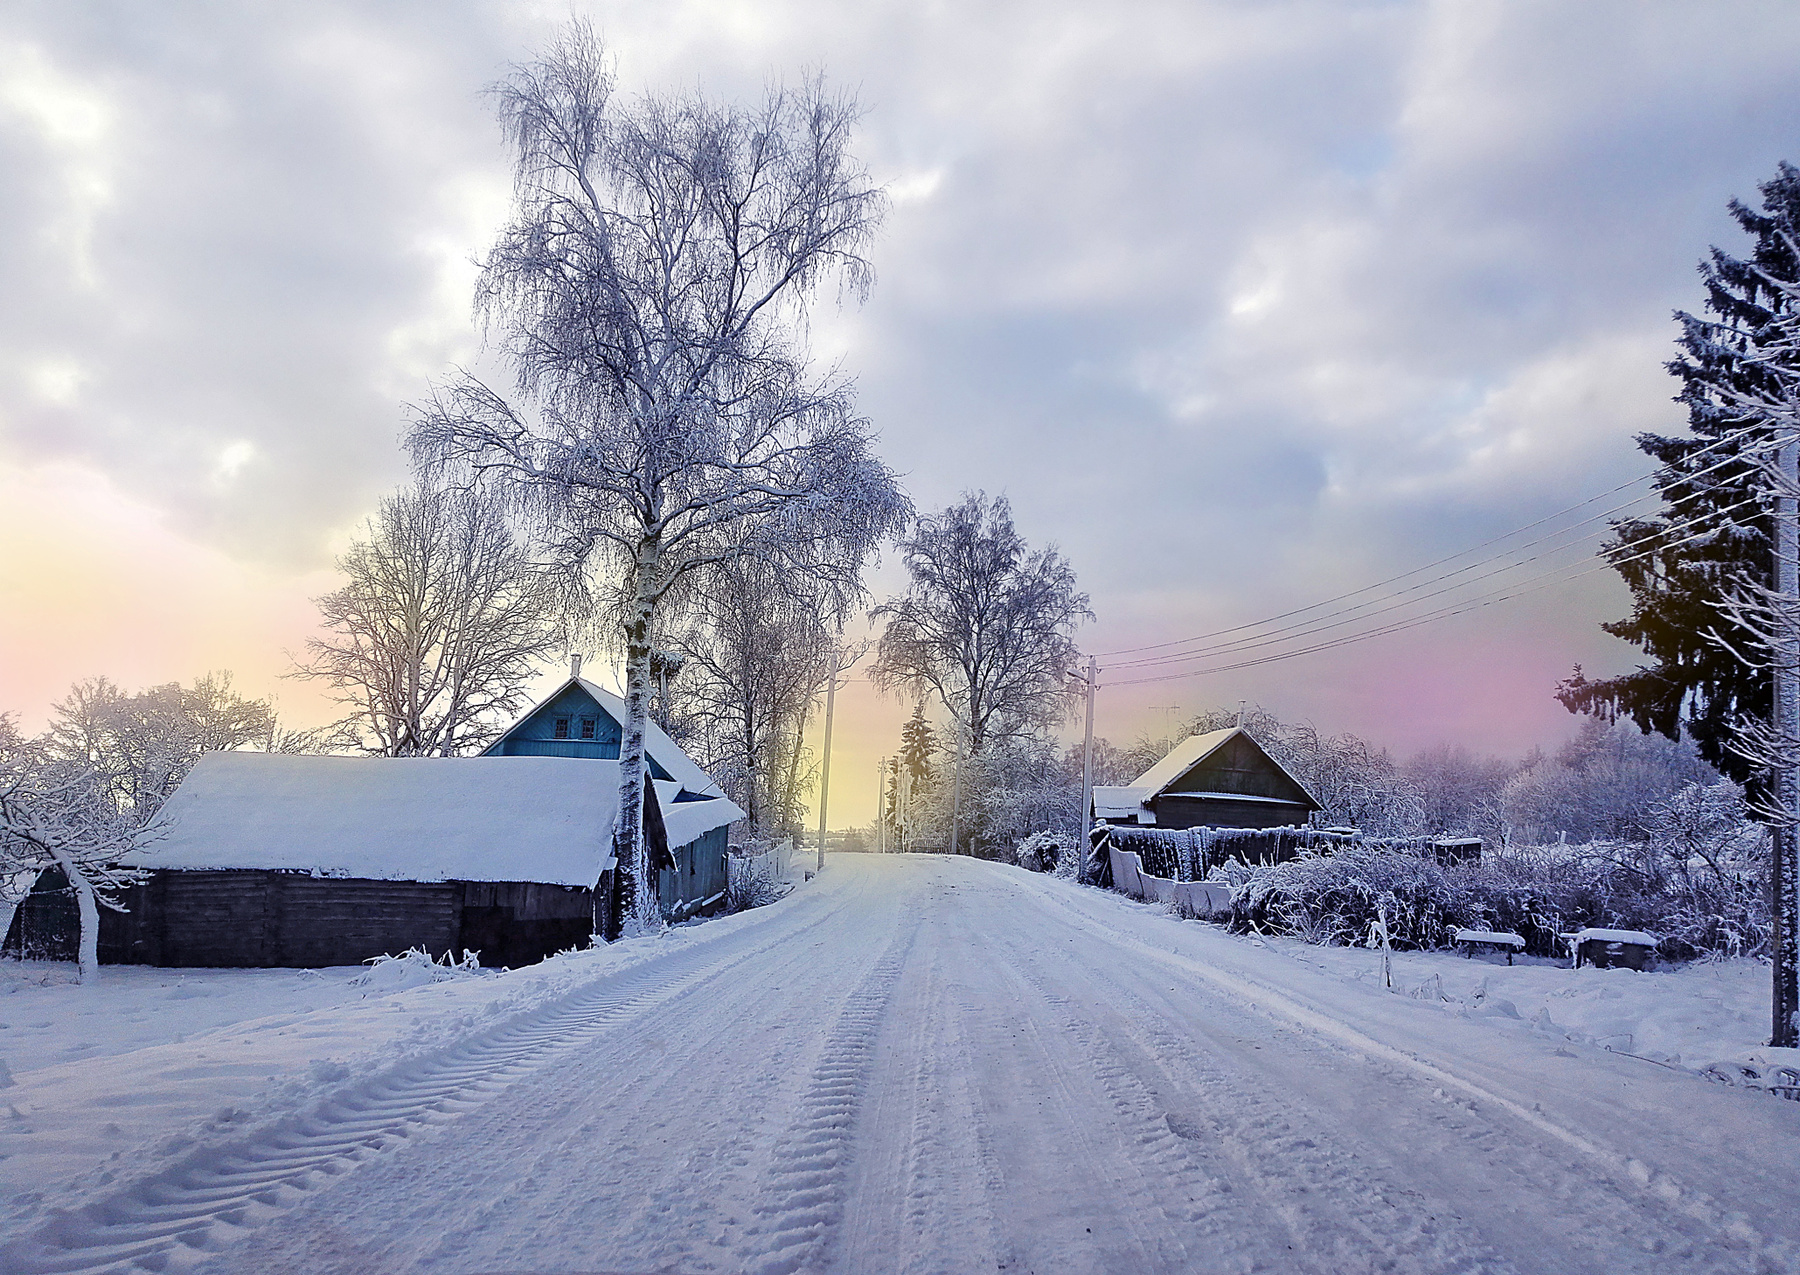 Зима в белорусской деревне Зима природа деревня деревья дома холод мороз снег дорога winter landscape village trees houses frost ice snow road